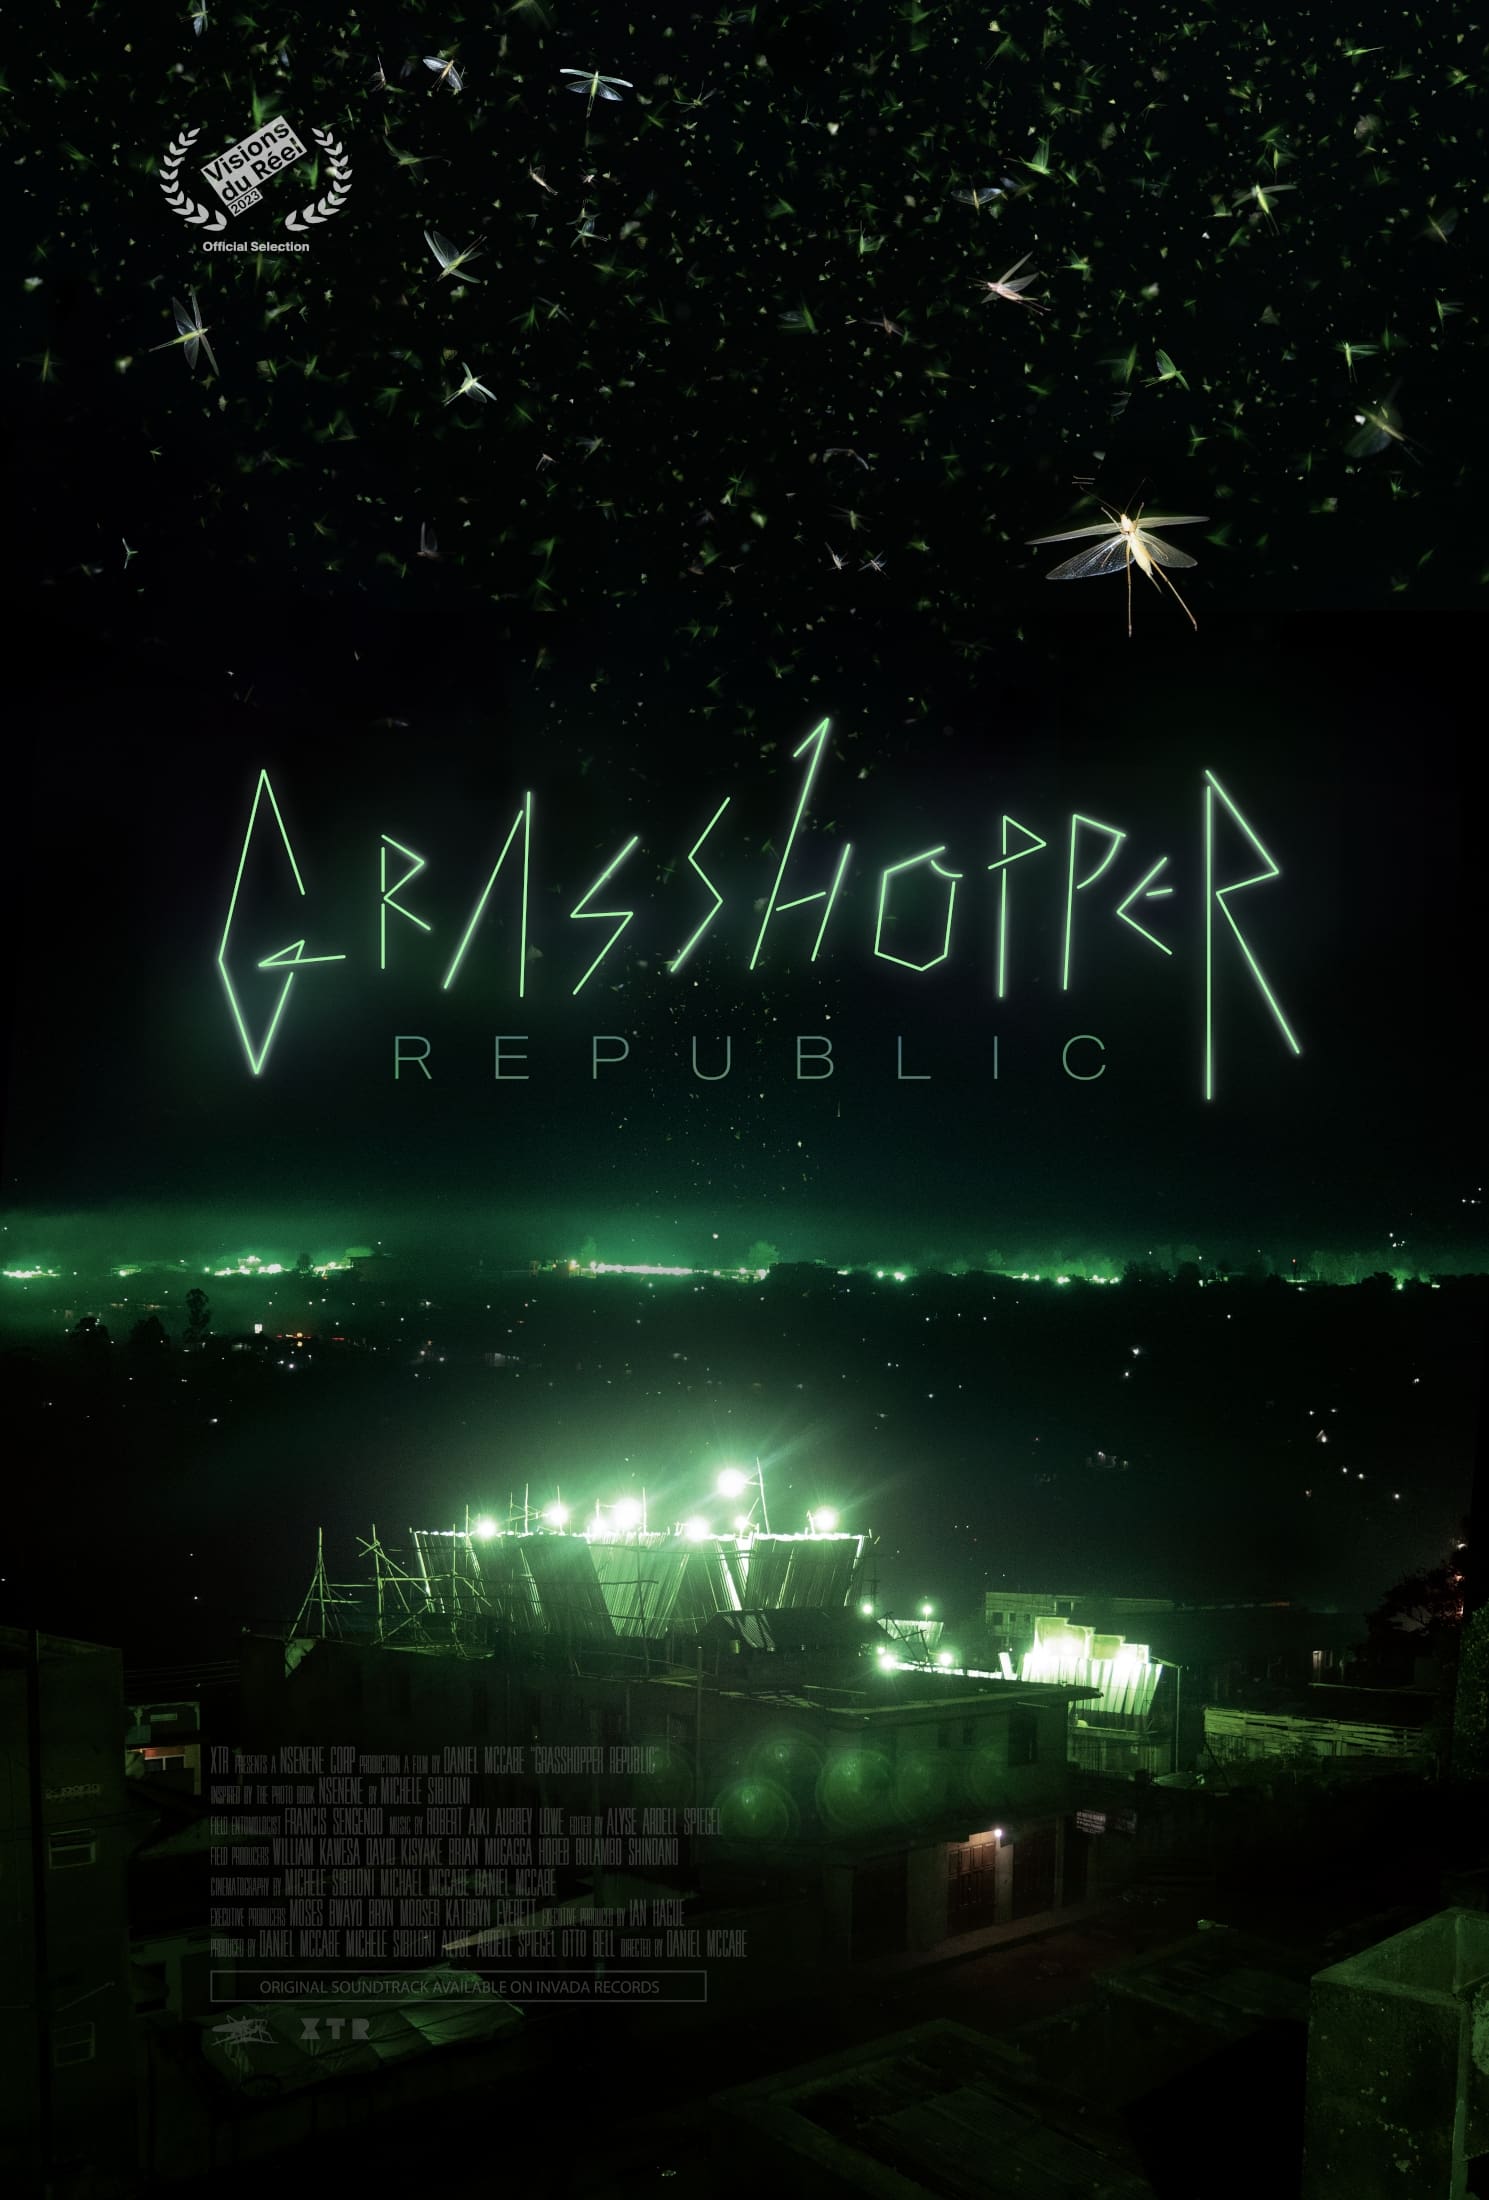 Grasshopper Republic